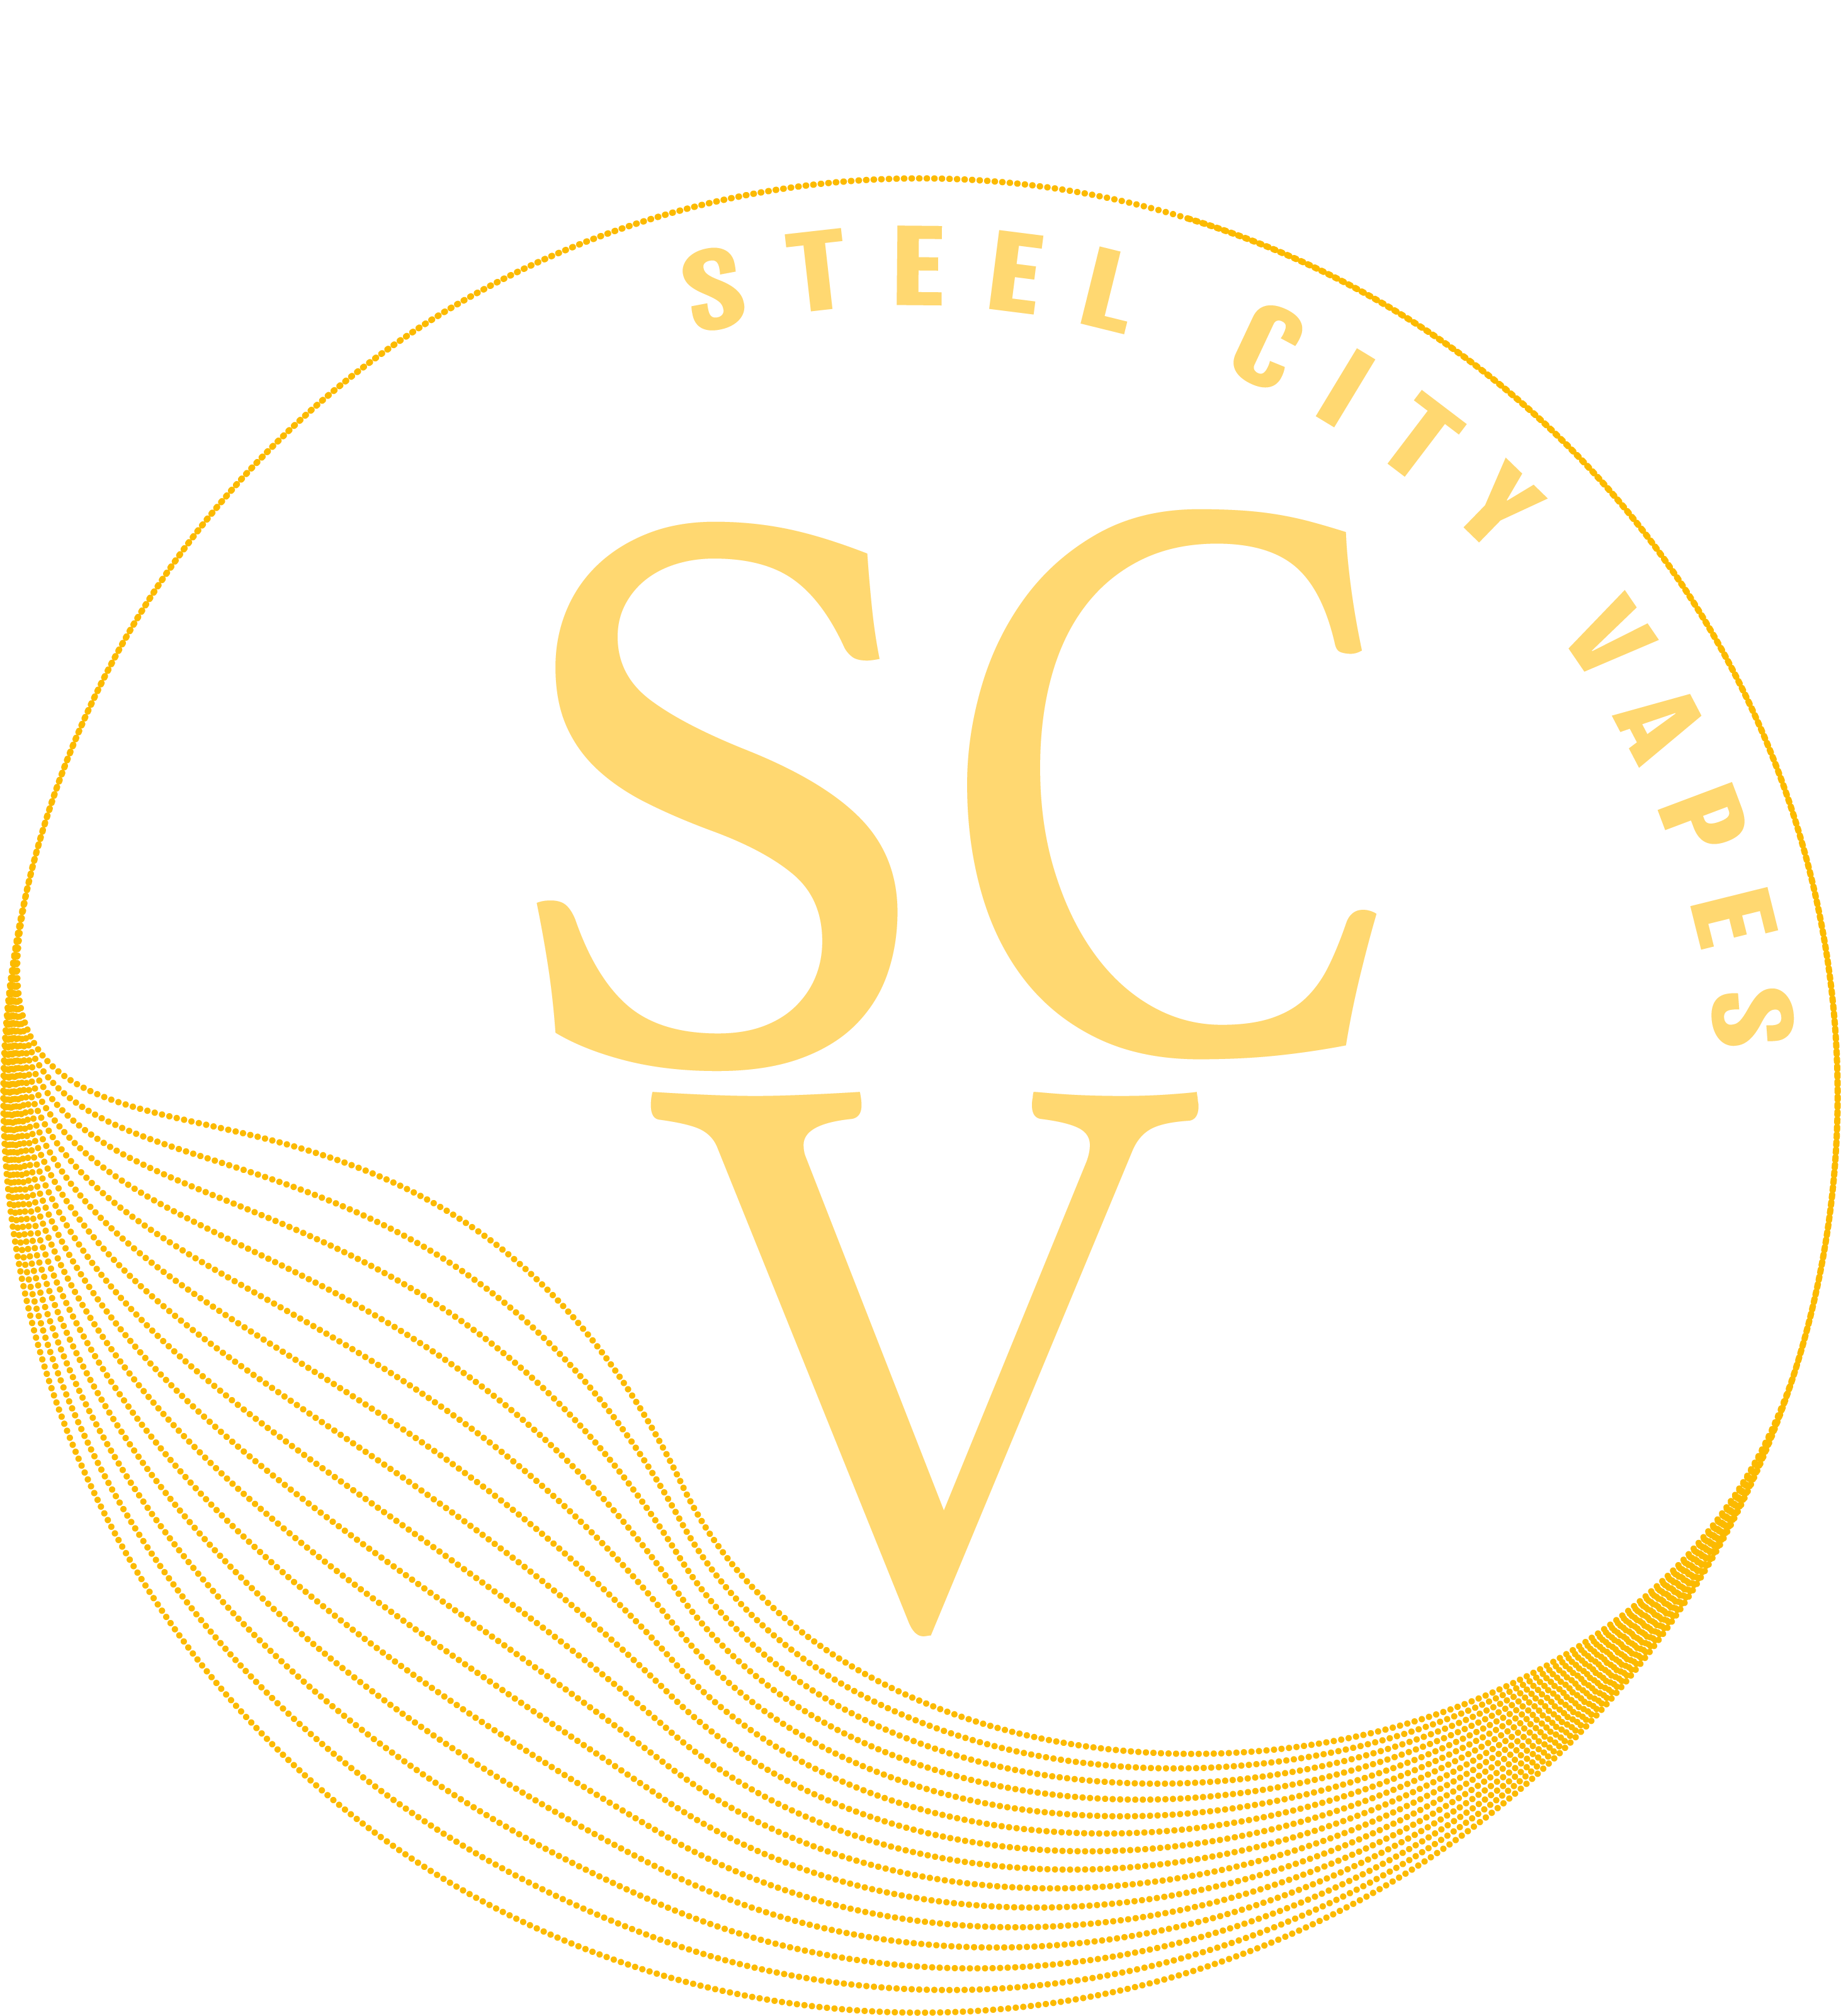 Steel City Vapes